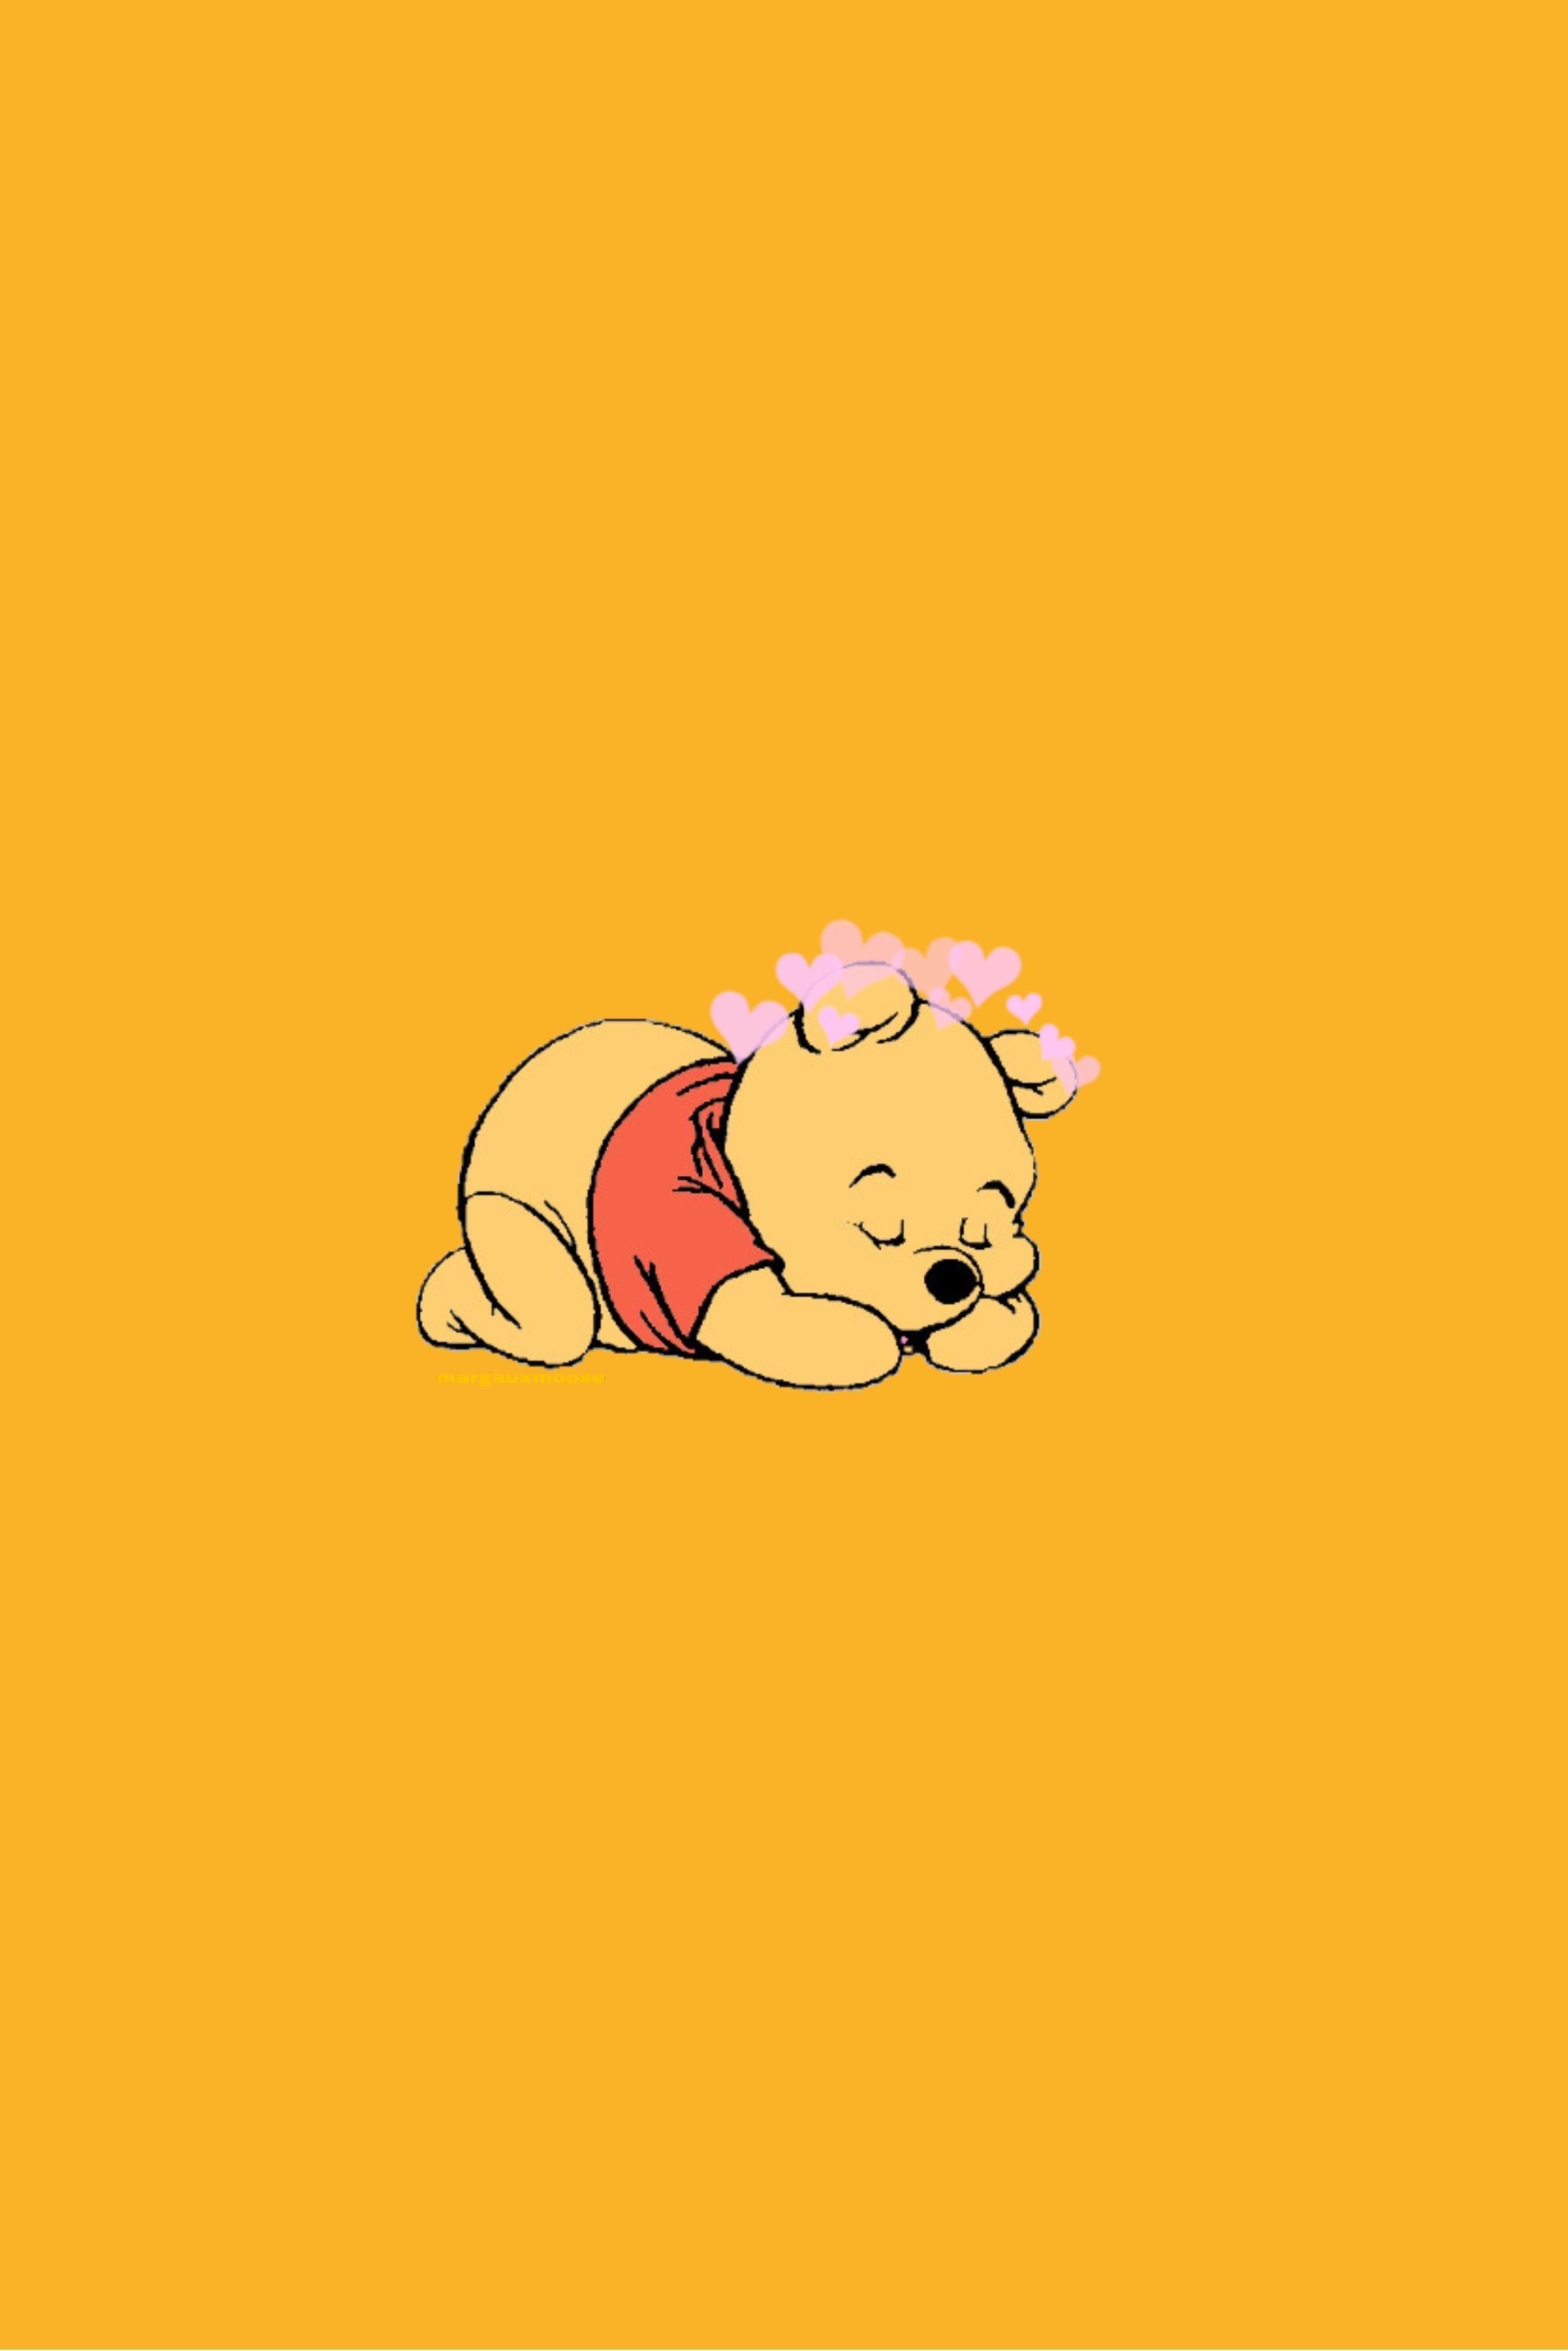 Cute Winnie the Pooh background ❤️. Winnie the pooh background, Cartoon wallpaper iphone, Cute winnie the pooh